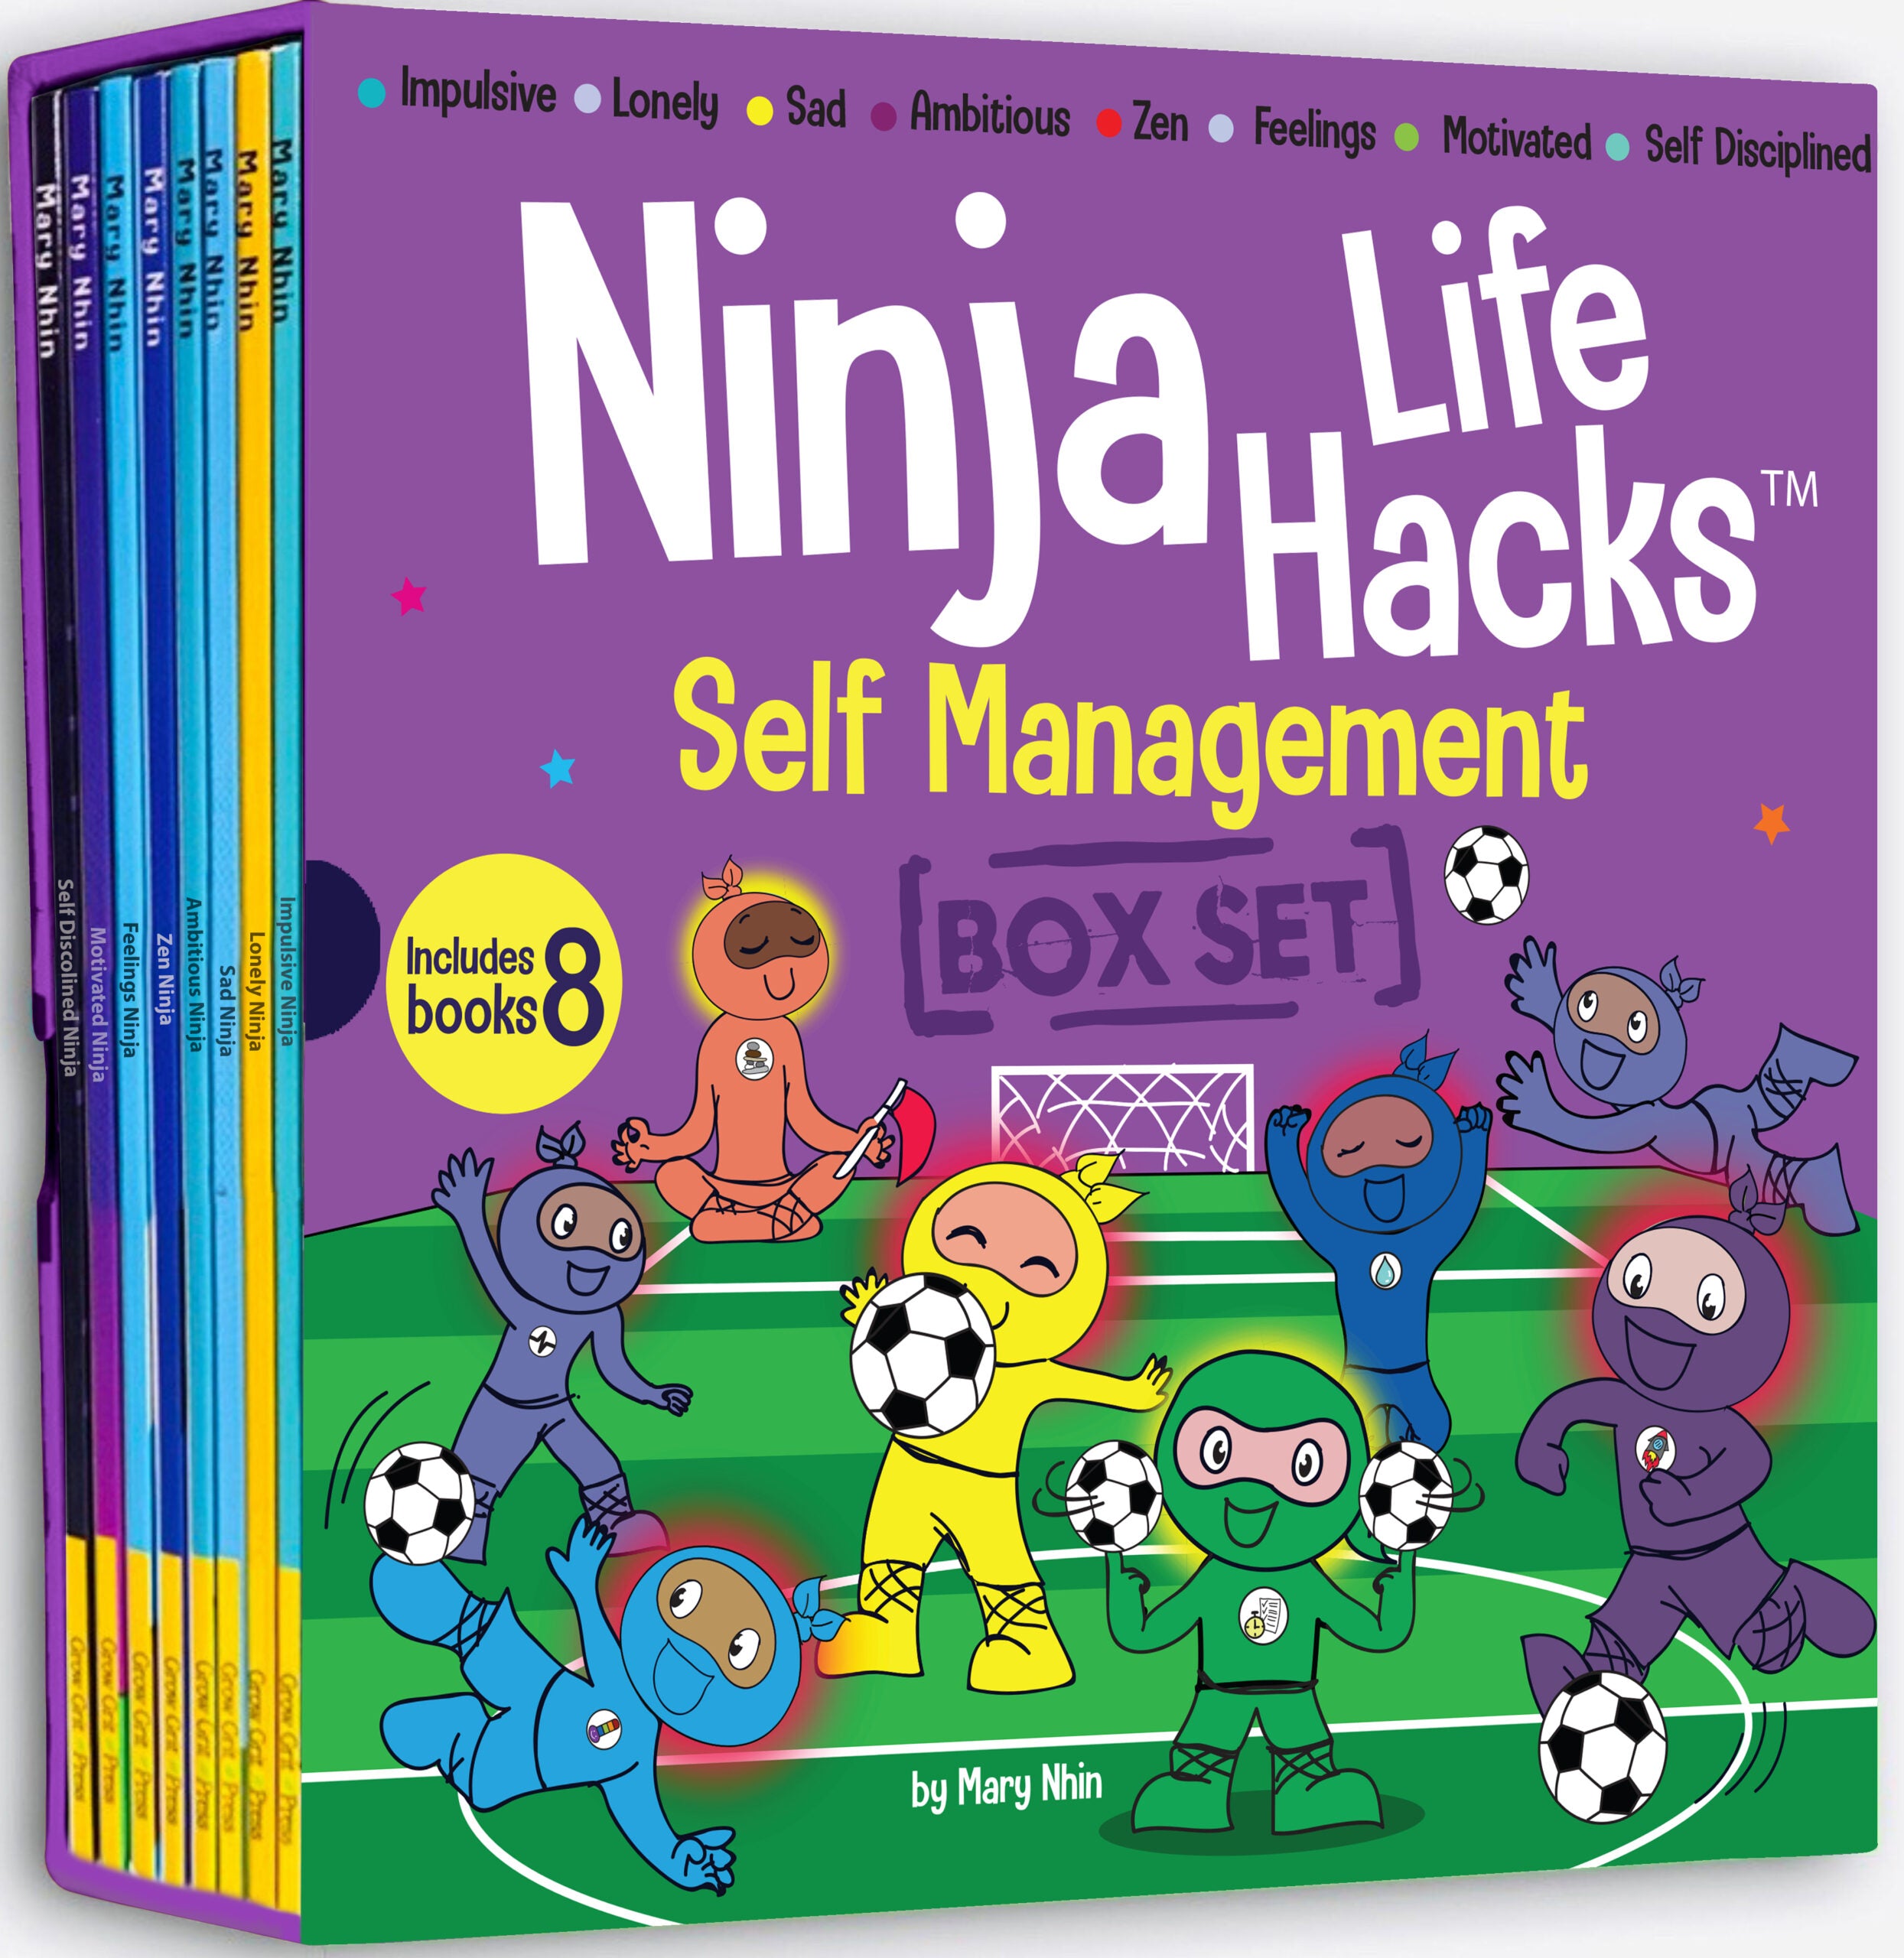 Ninja Books for Kids (Our Top Picks) - Pragmatic Mom